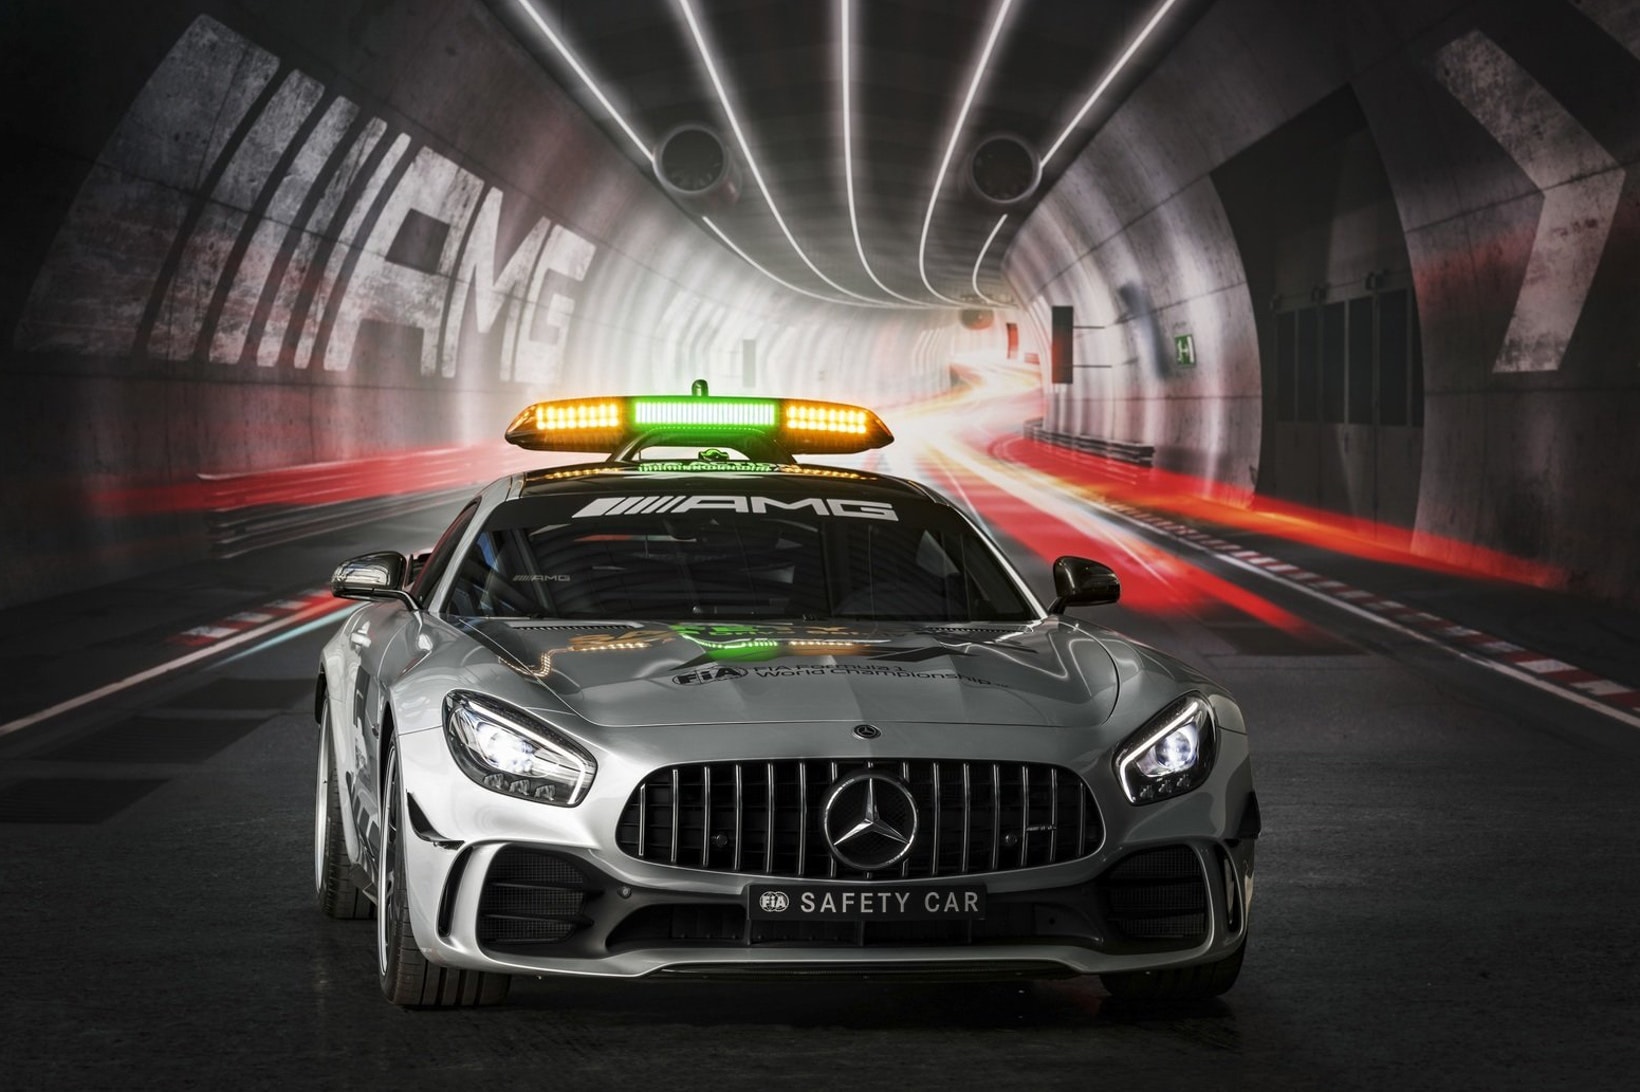 Mercedes-AMG 正式發佈「史上最強」F1 安全車